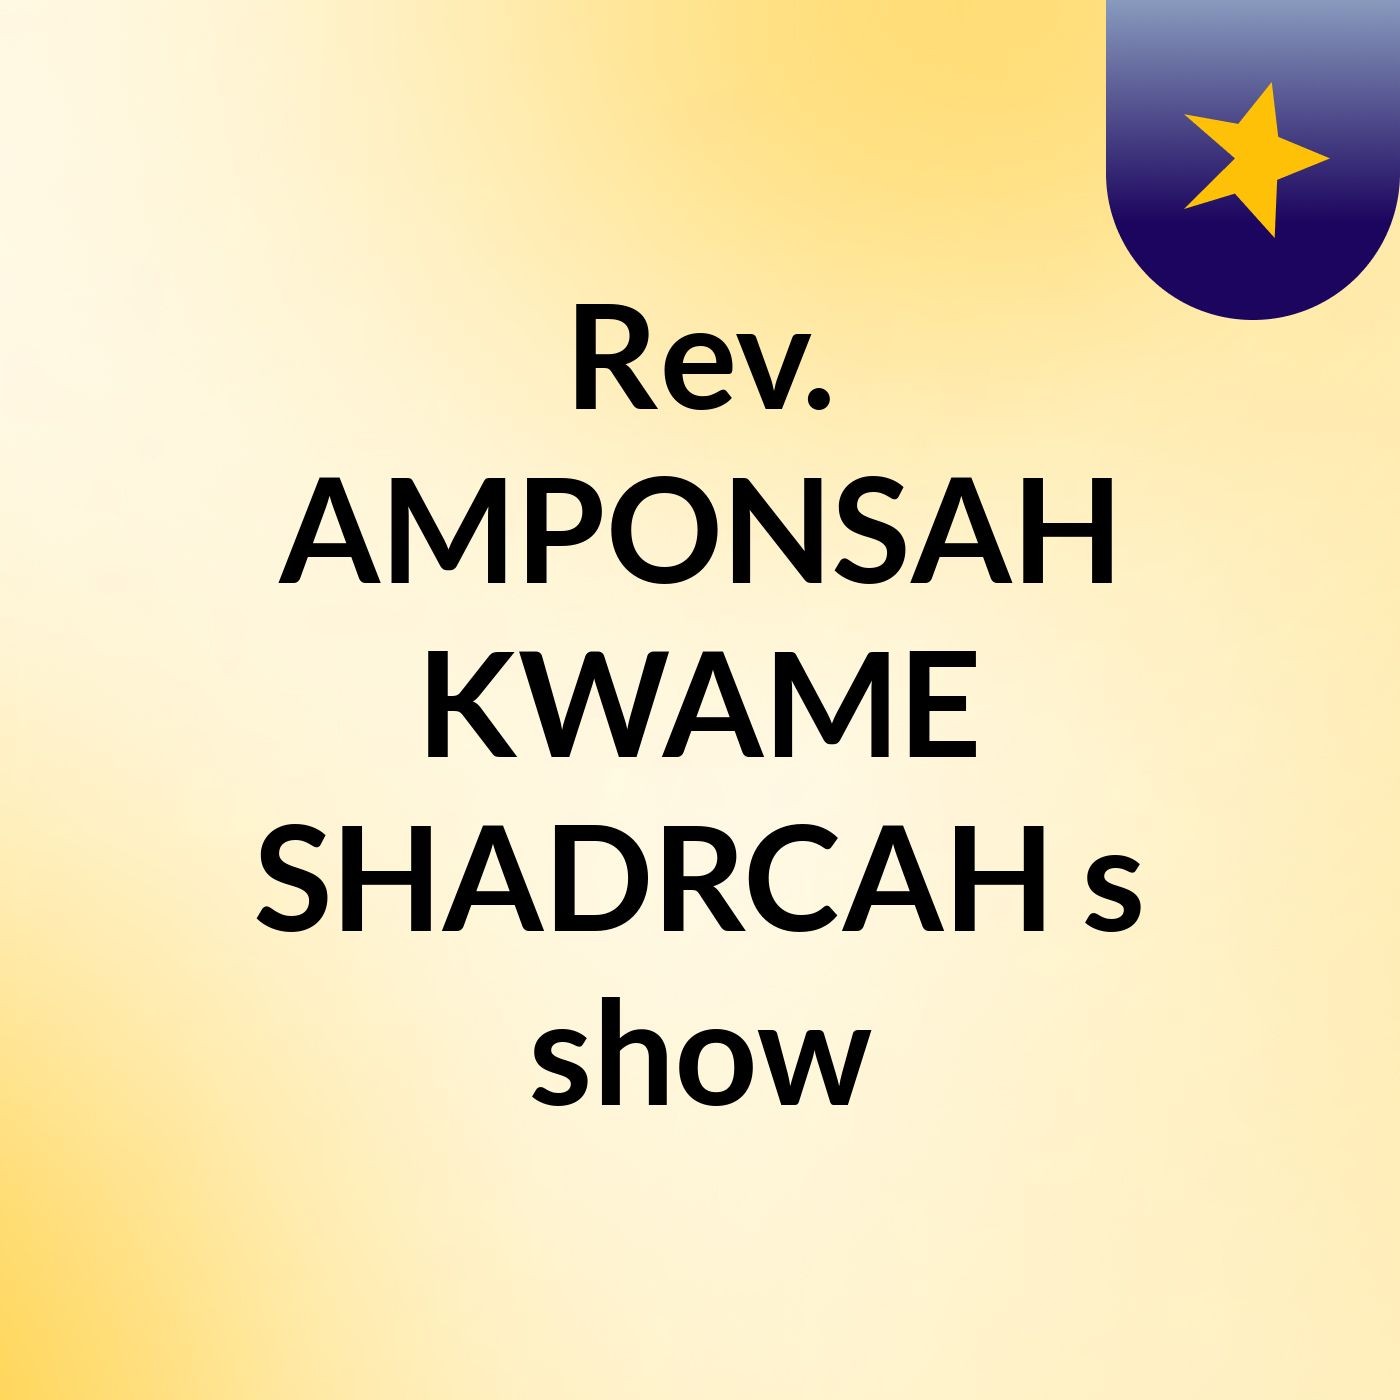 Rev. AMPONSAH KWAME SHADRCAH's show